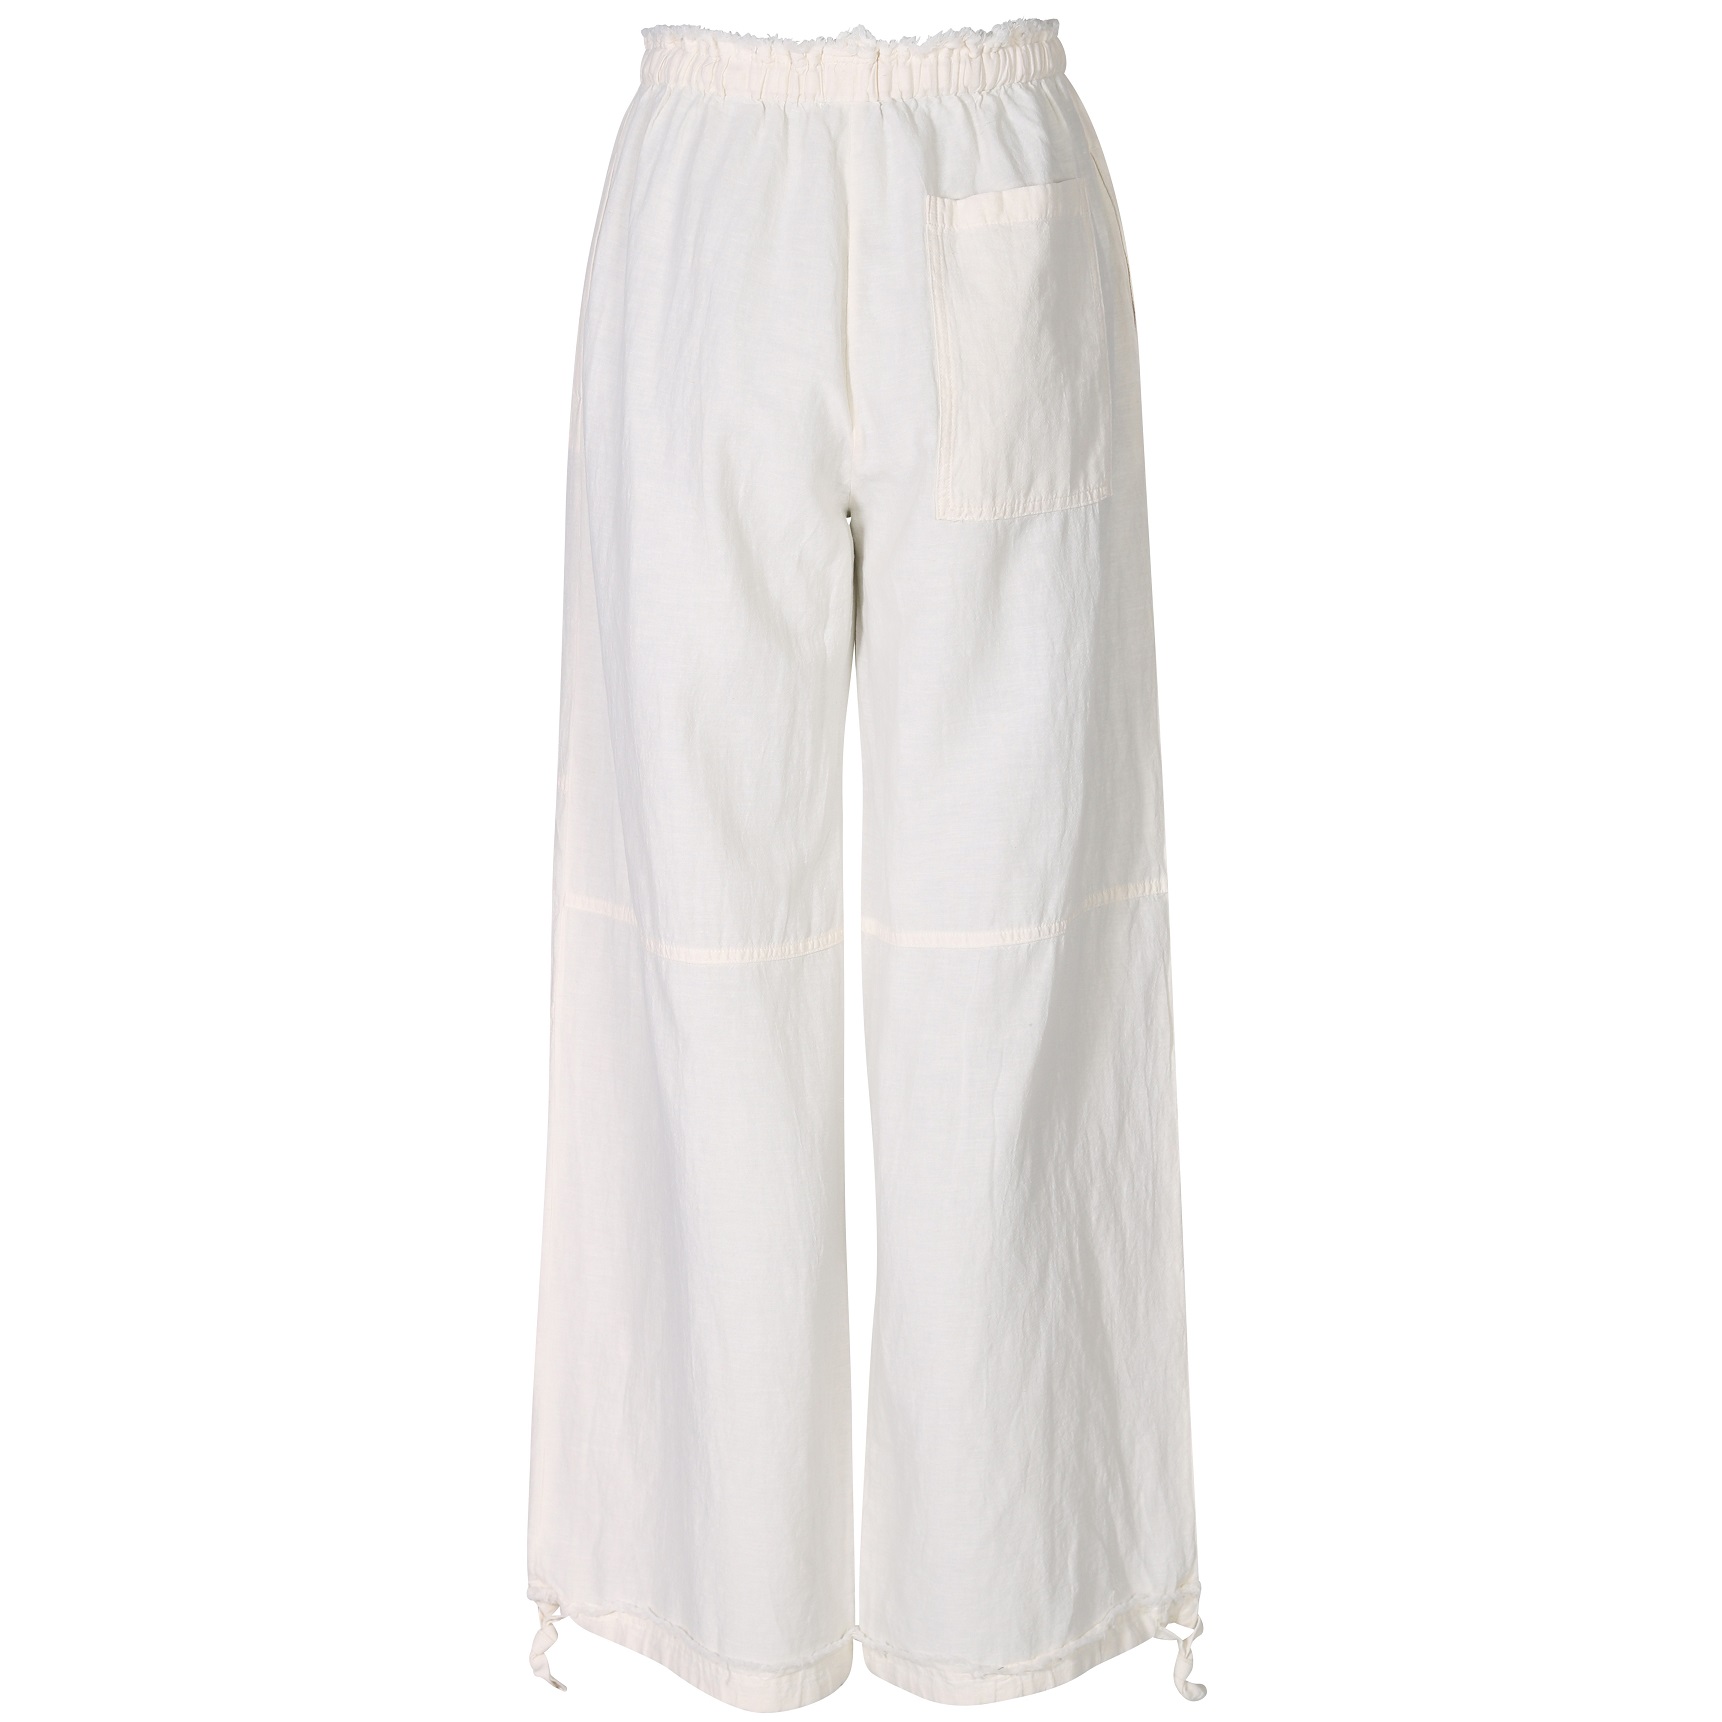 ACNE STUDIOS Cotton/Linen Pant in Warm White